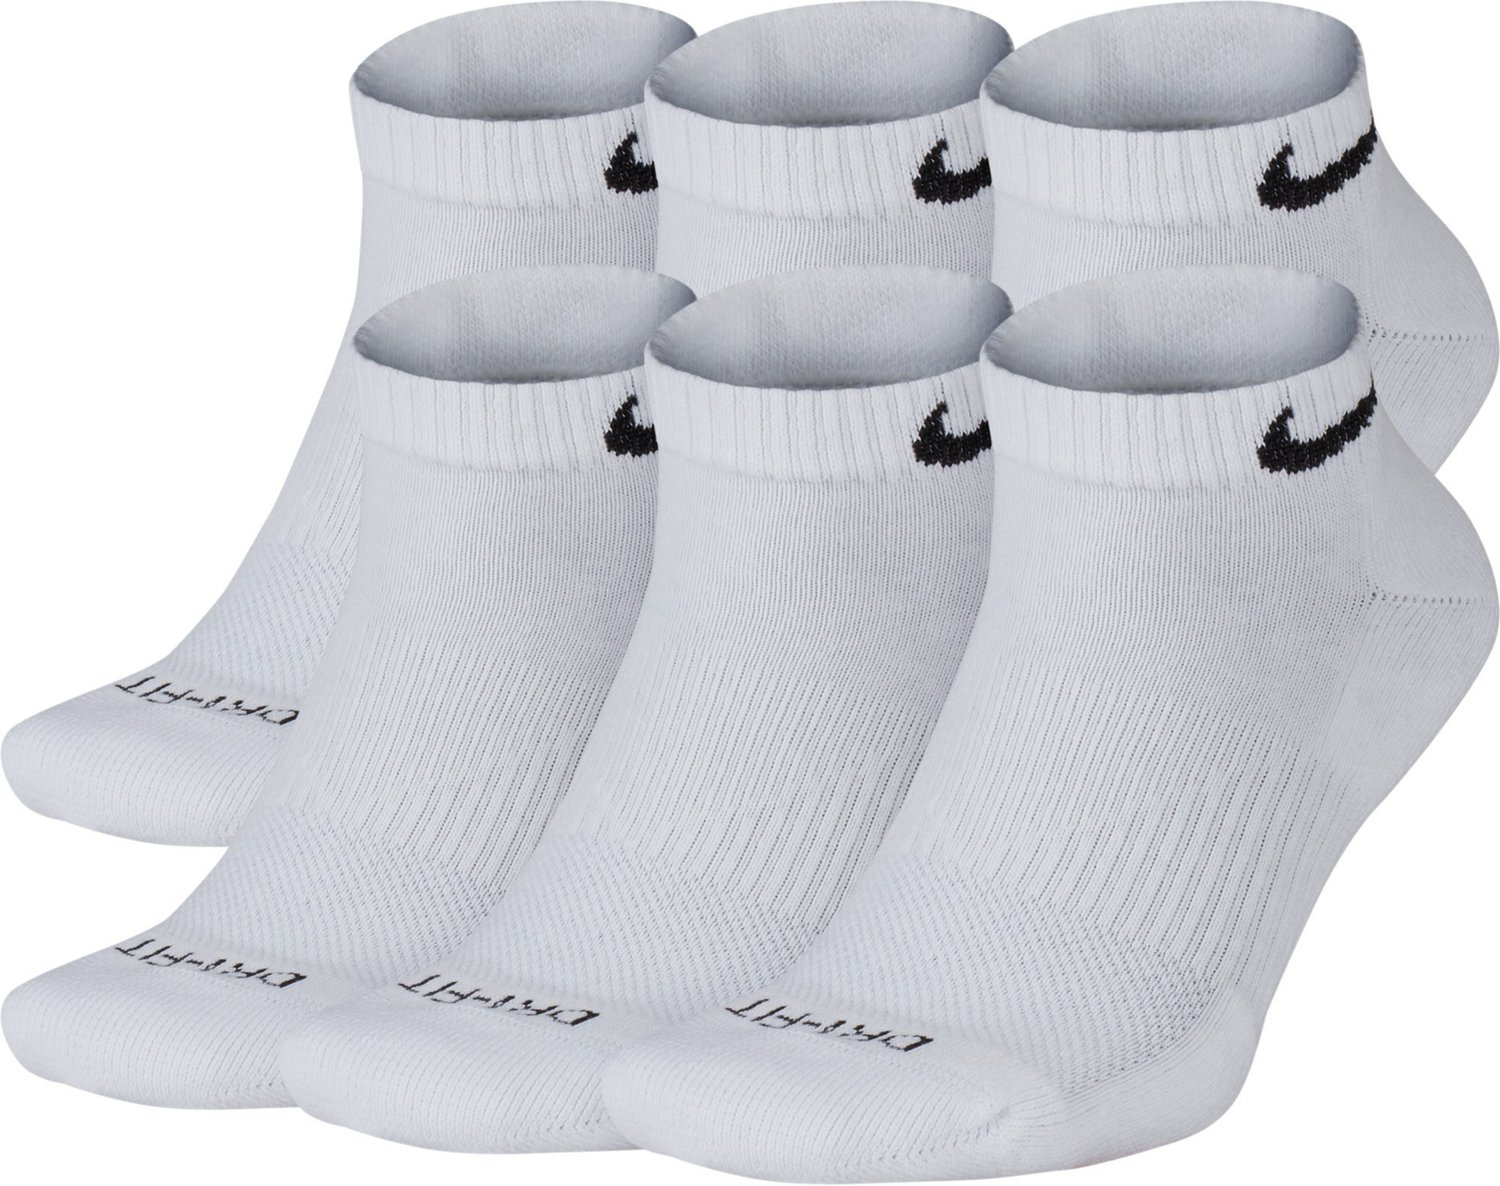 Nike Men's Everyday Plus Cushion Training Low Cut Socks 6 Pack